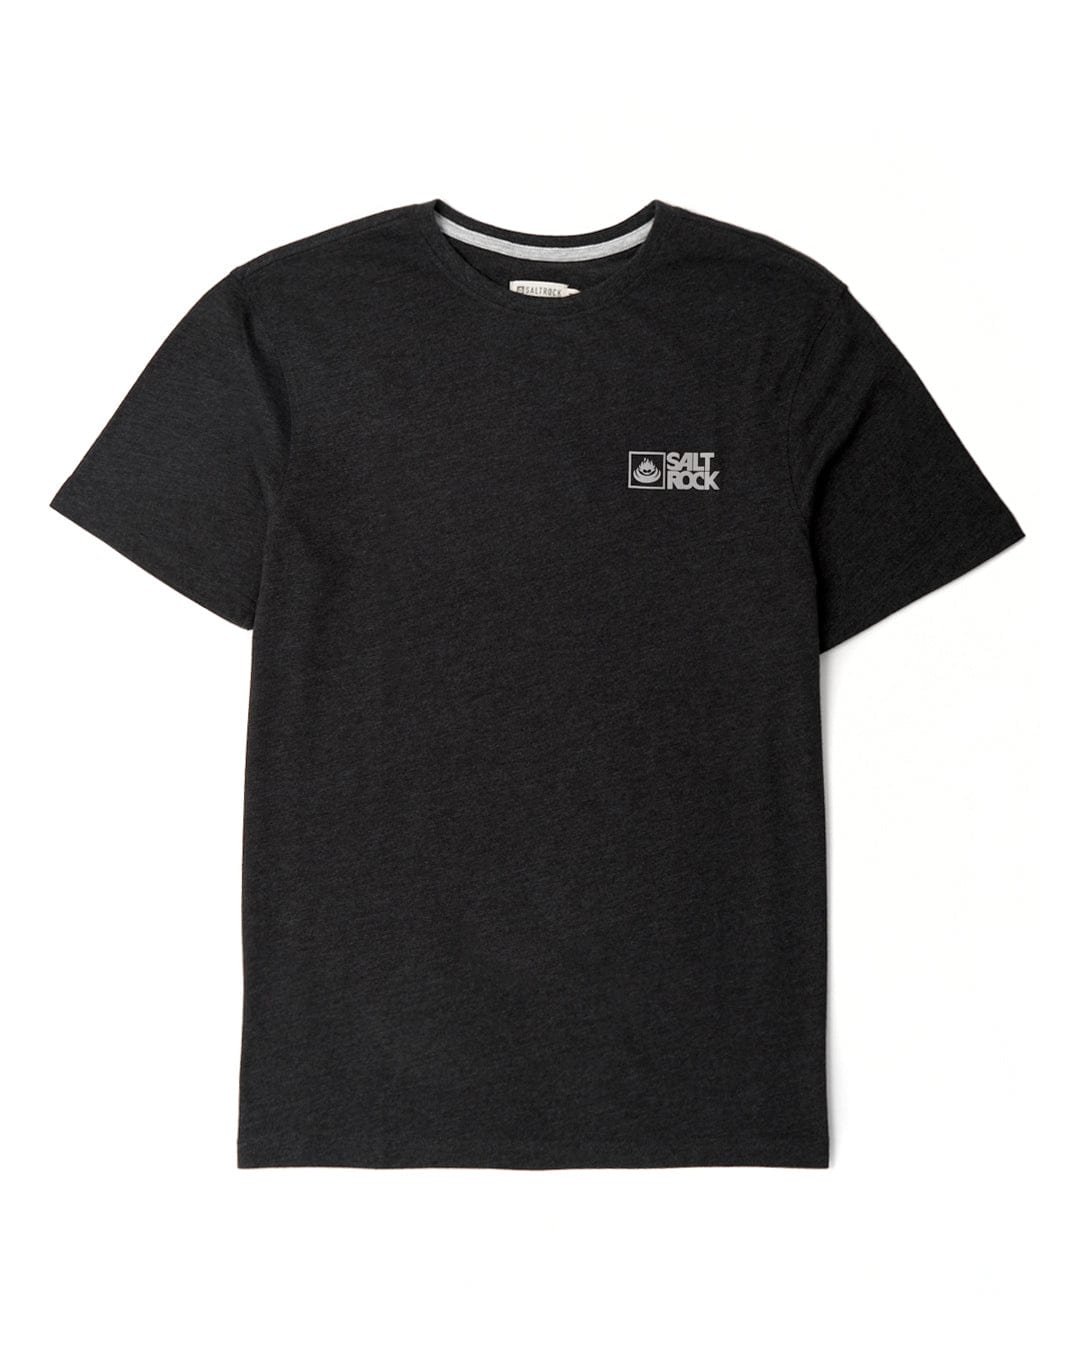 A lightweight Saltrock Corp 20 - Mens Short Sleeve T-Shirt - Charcoal with a logo on it.